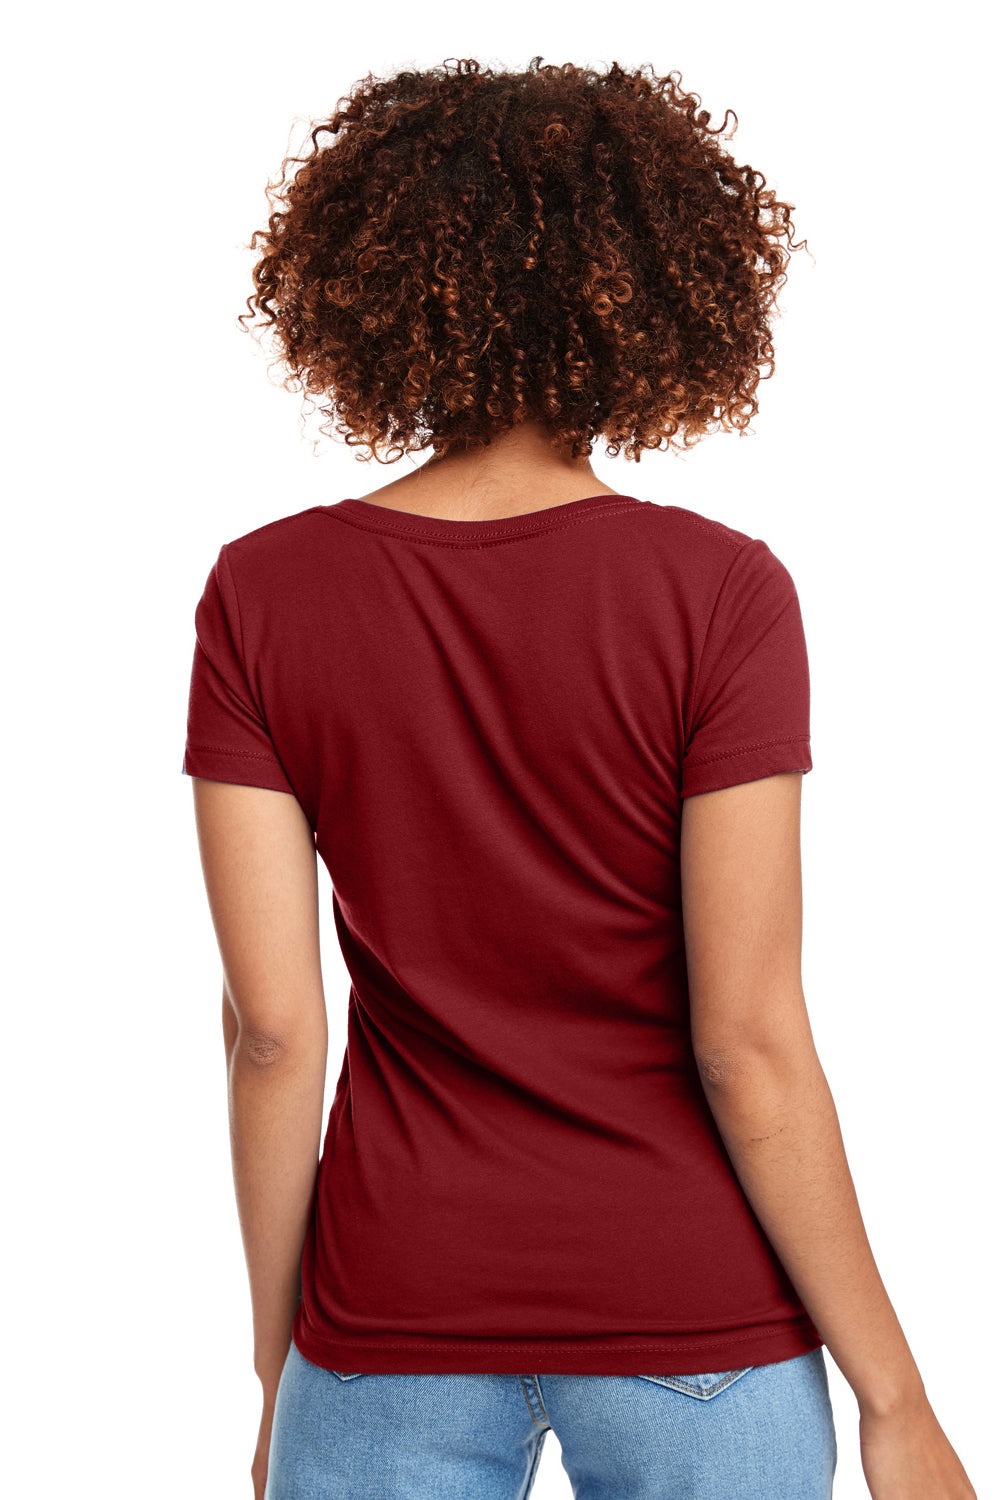 Next Level N1540 Womens Ideal Jersey Short Sleeve V-Neck T-Shirt Scarlet Red Back